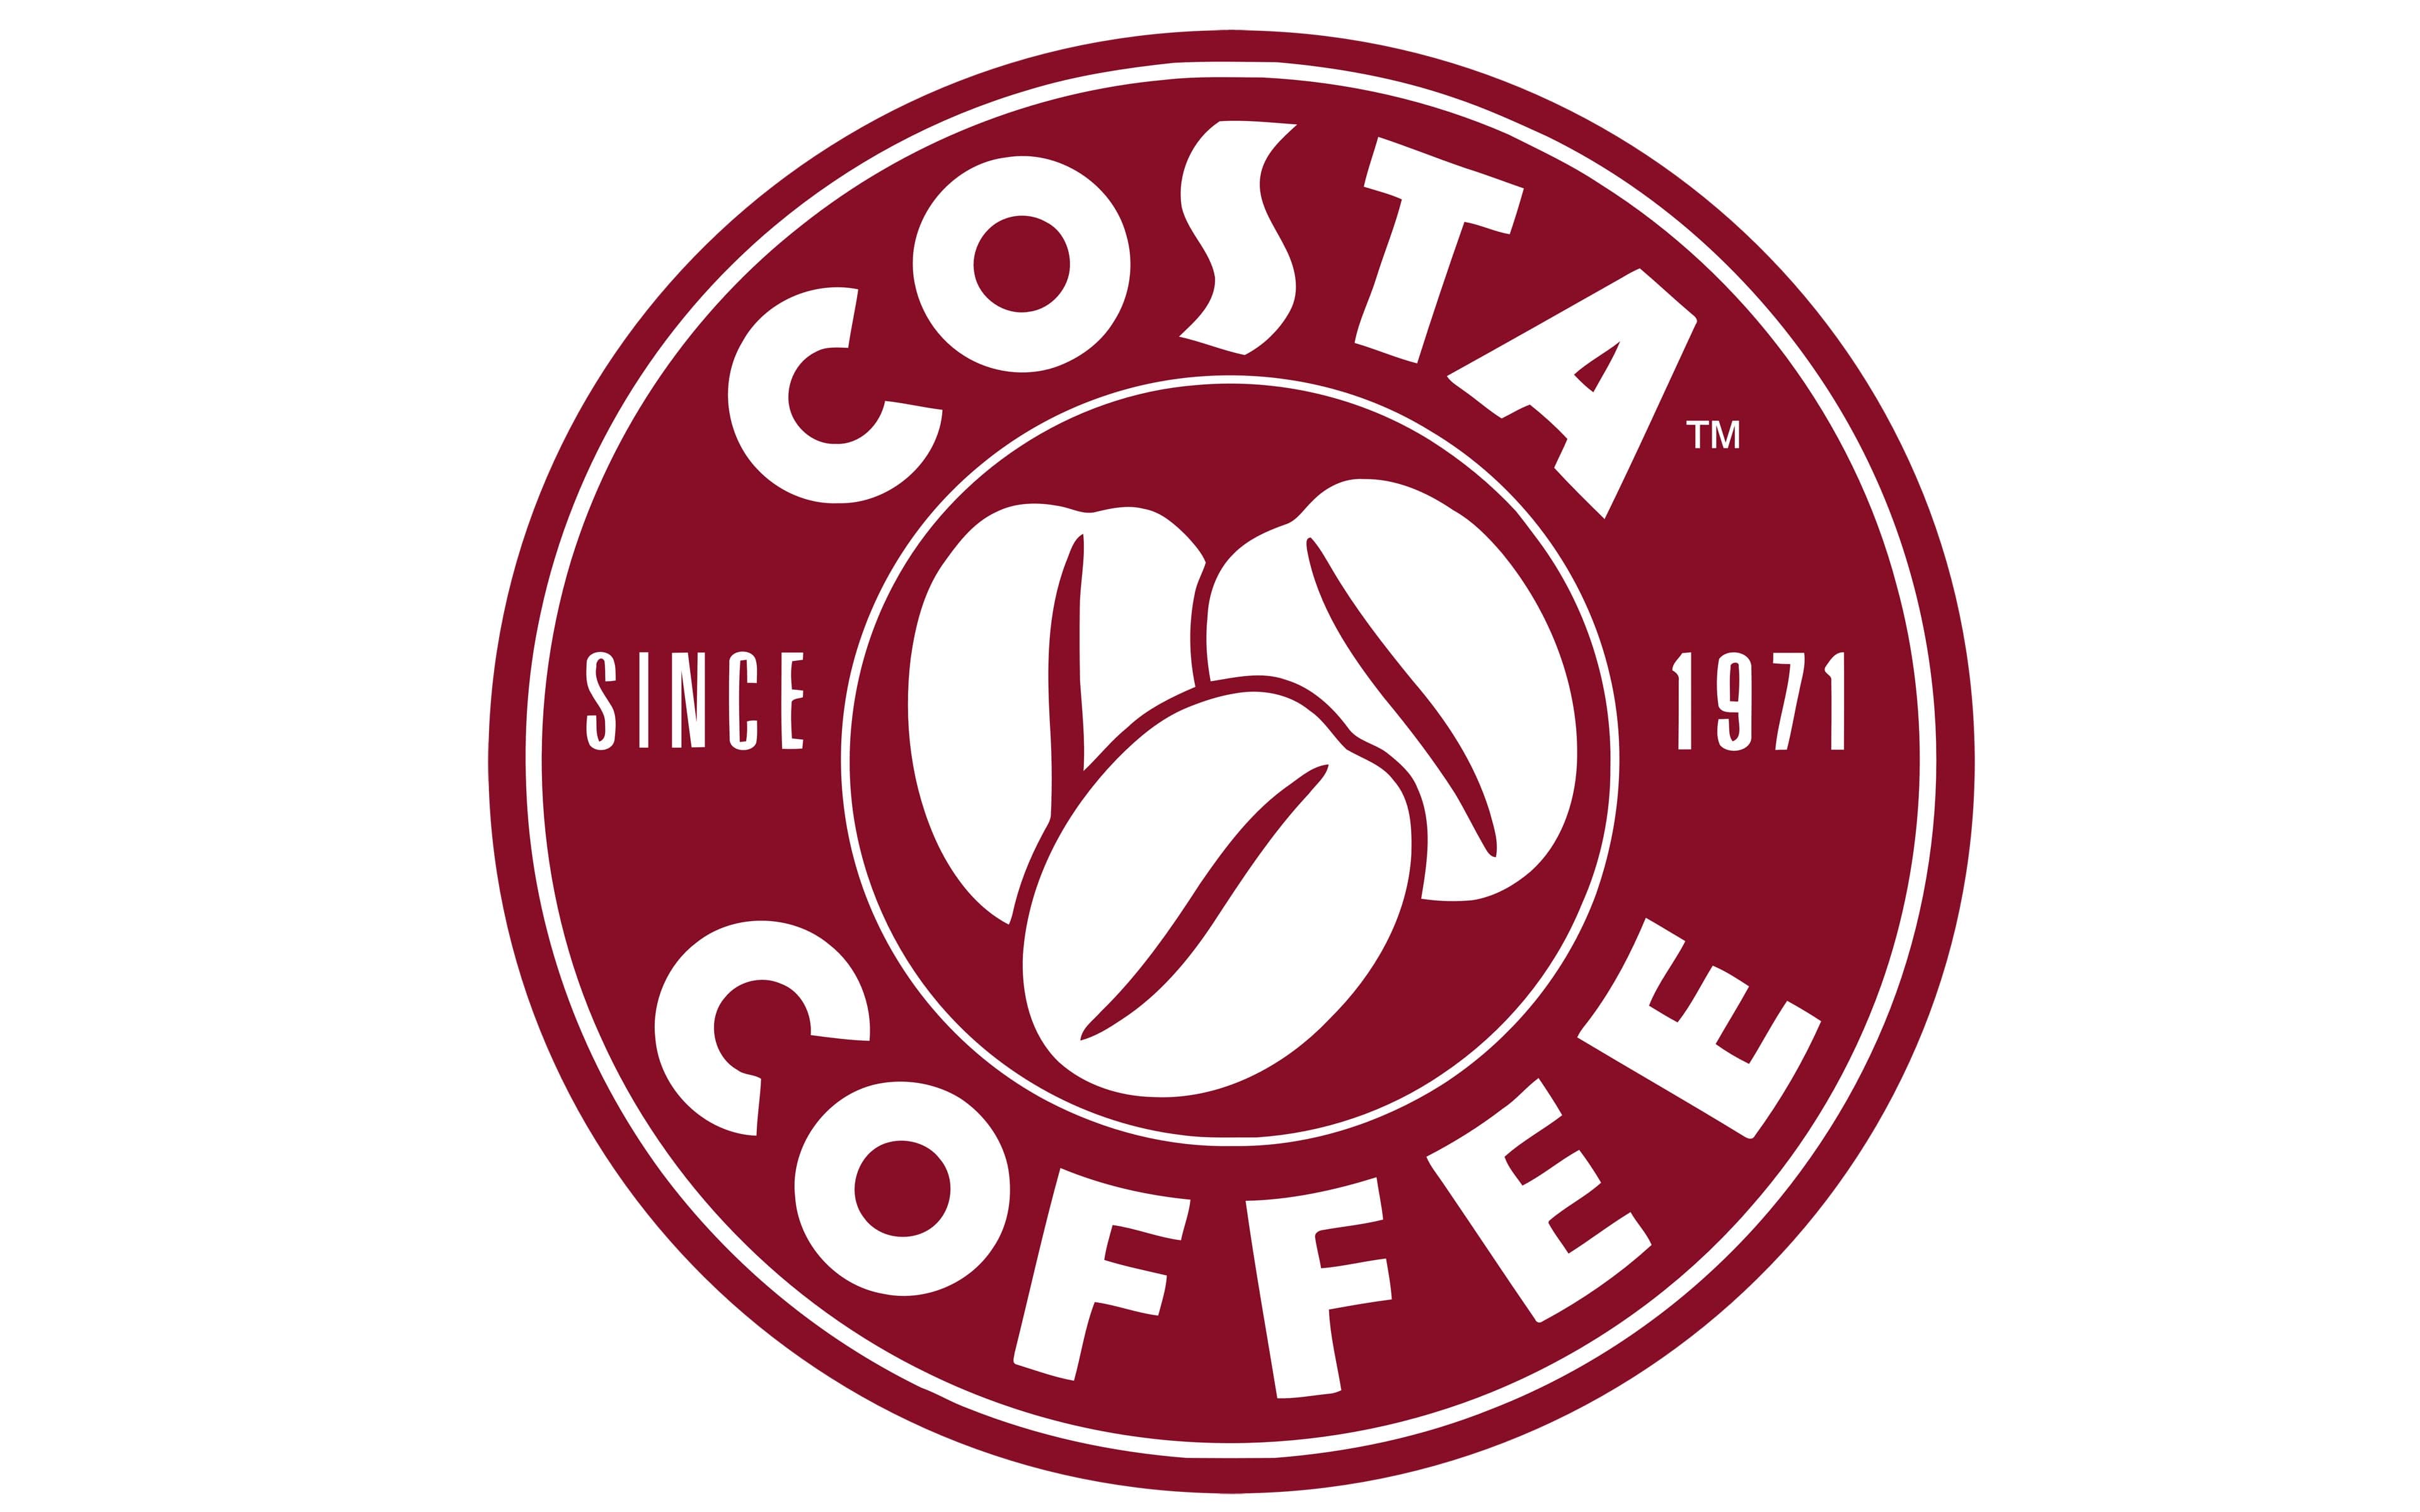 coffee brand logos and names